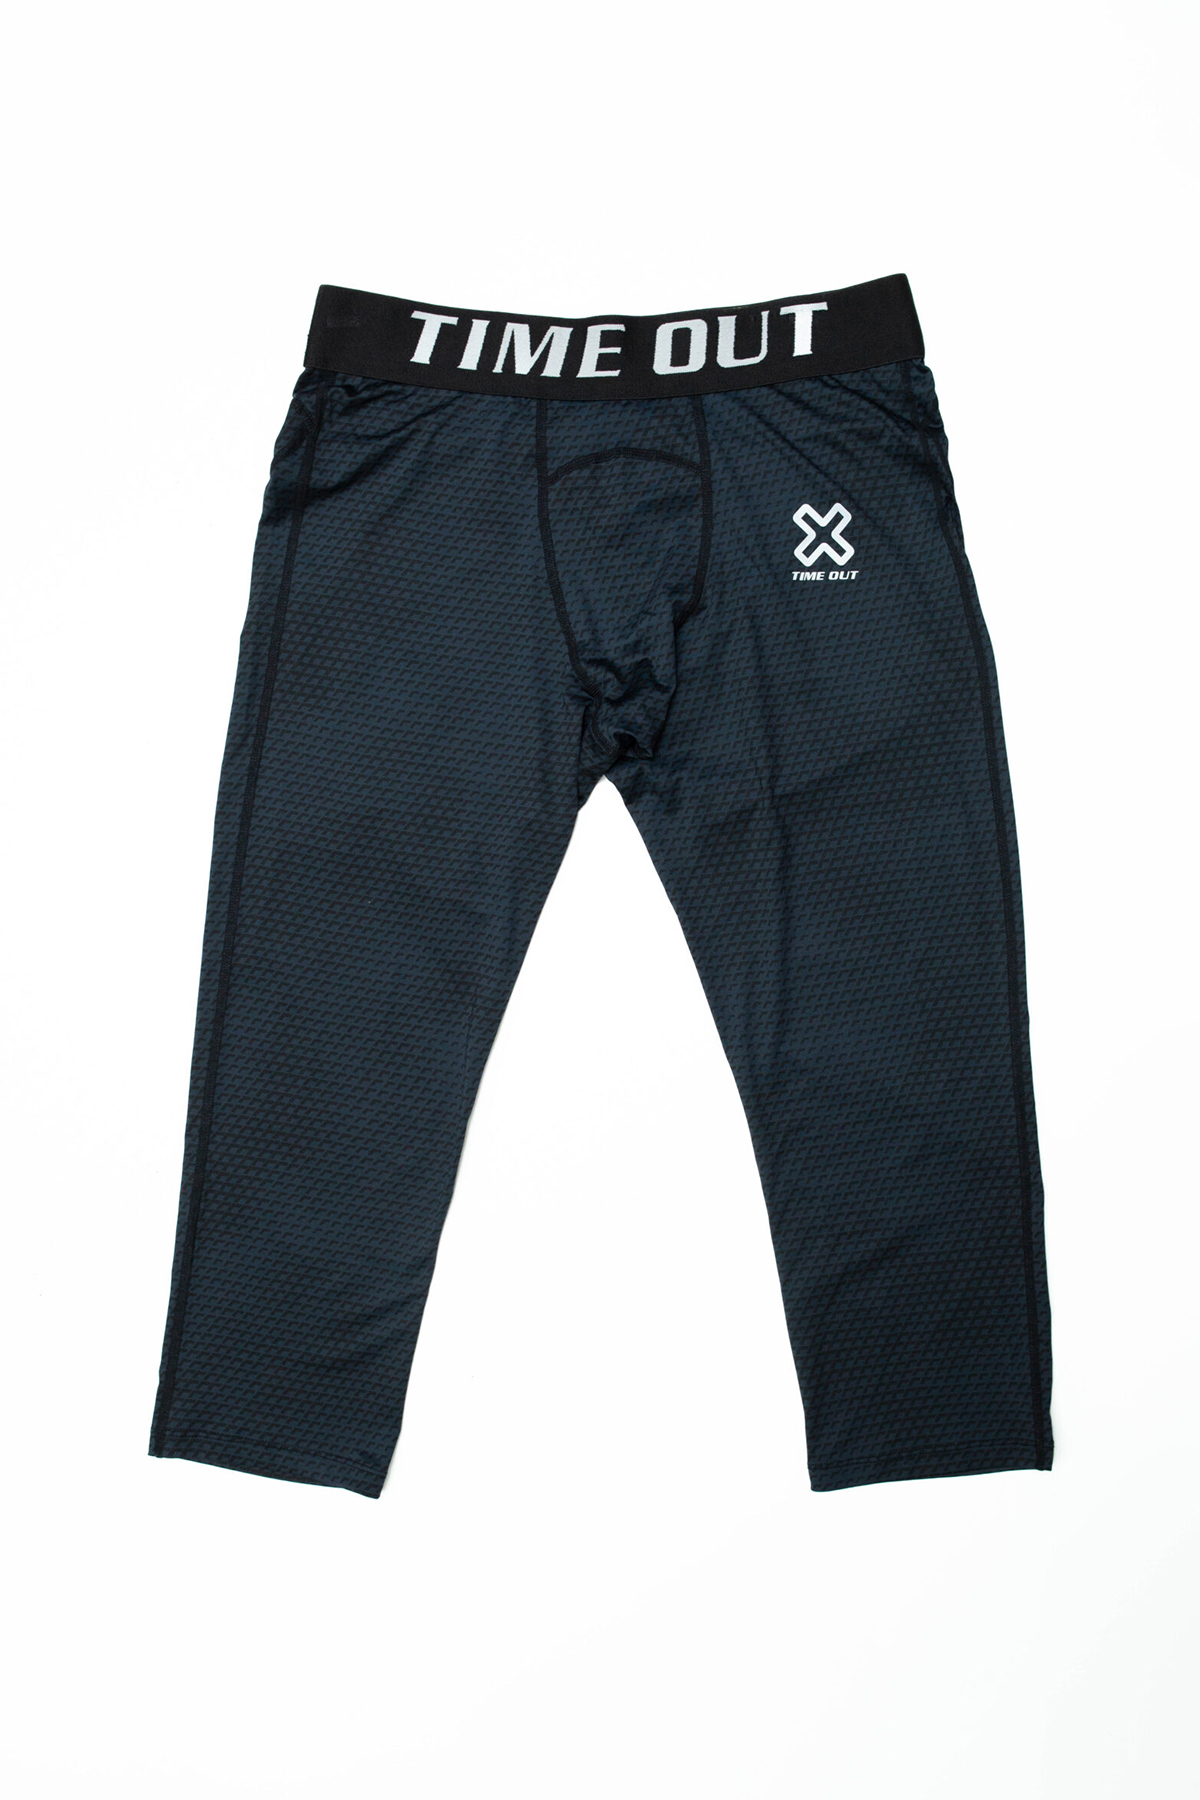 Time-Out-X-Men’s-Long-Gym-Shorts—Black—Front